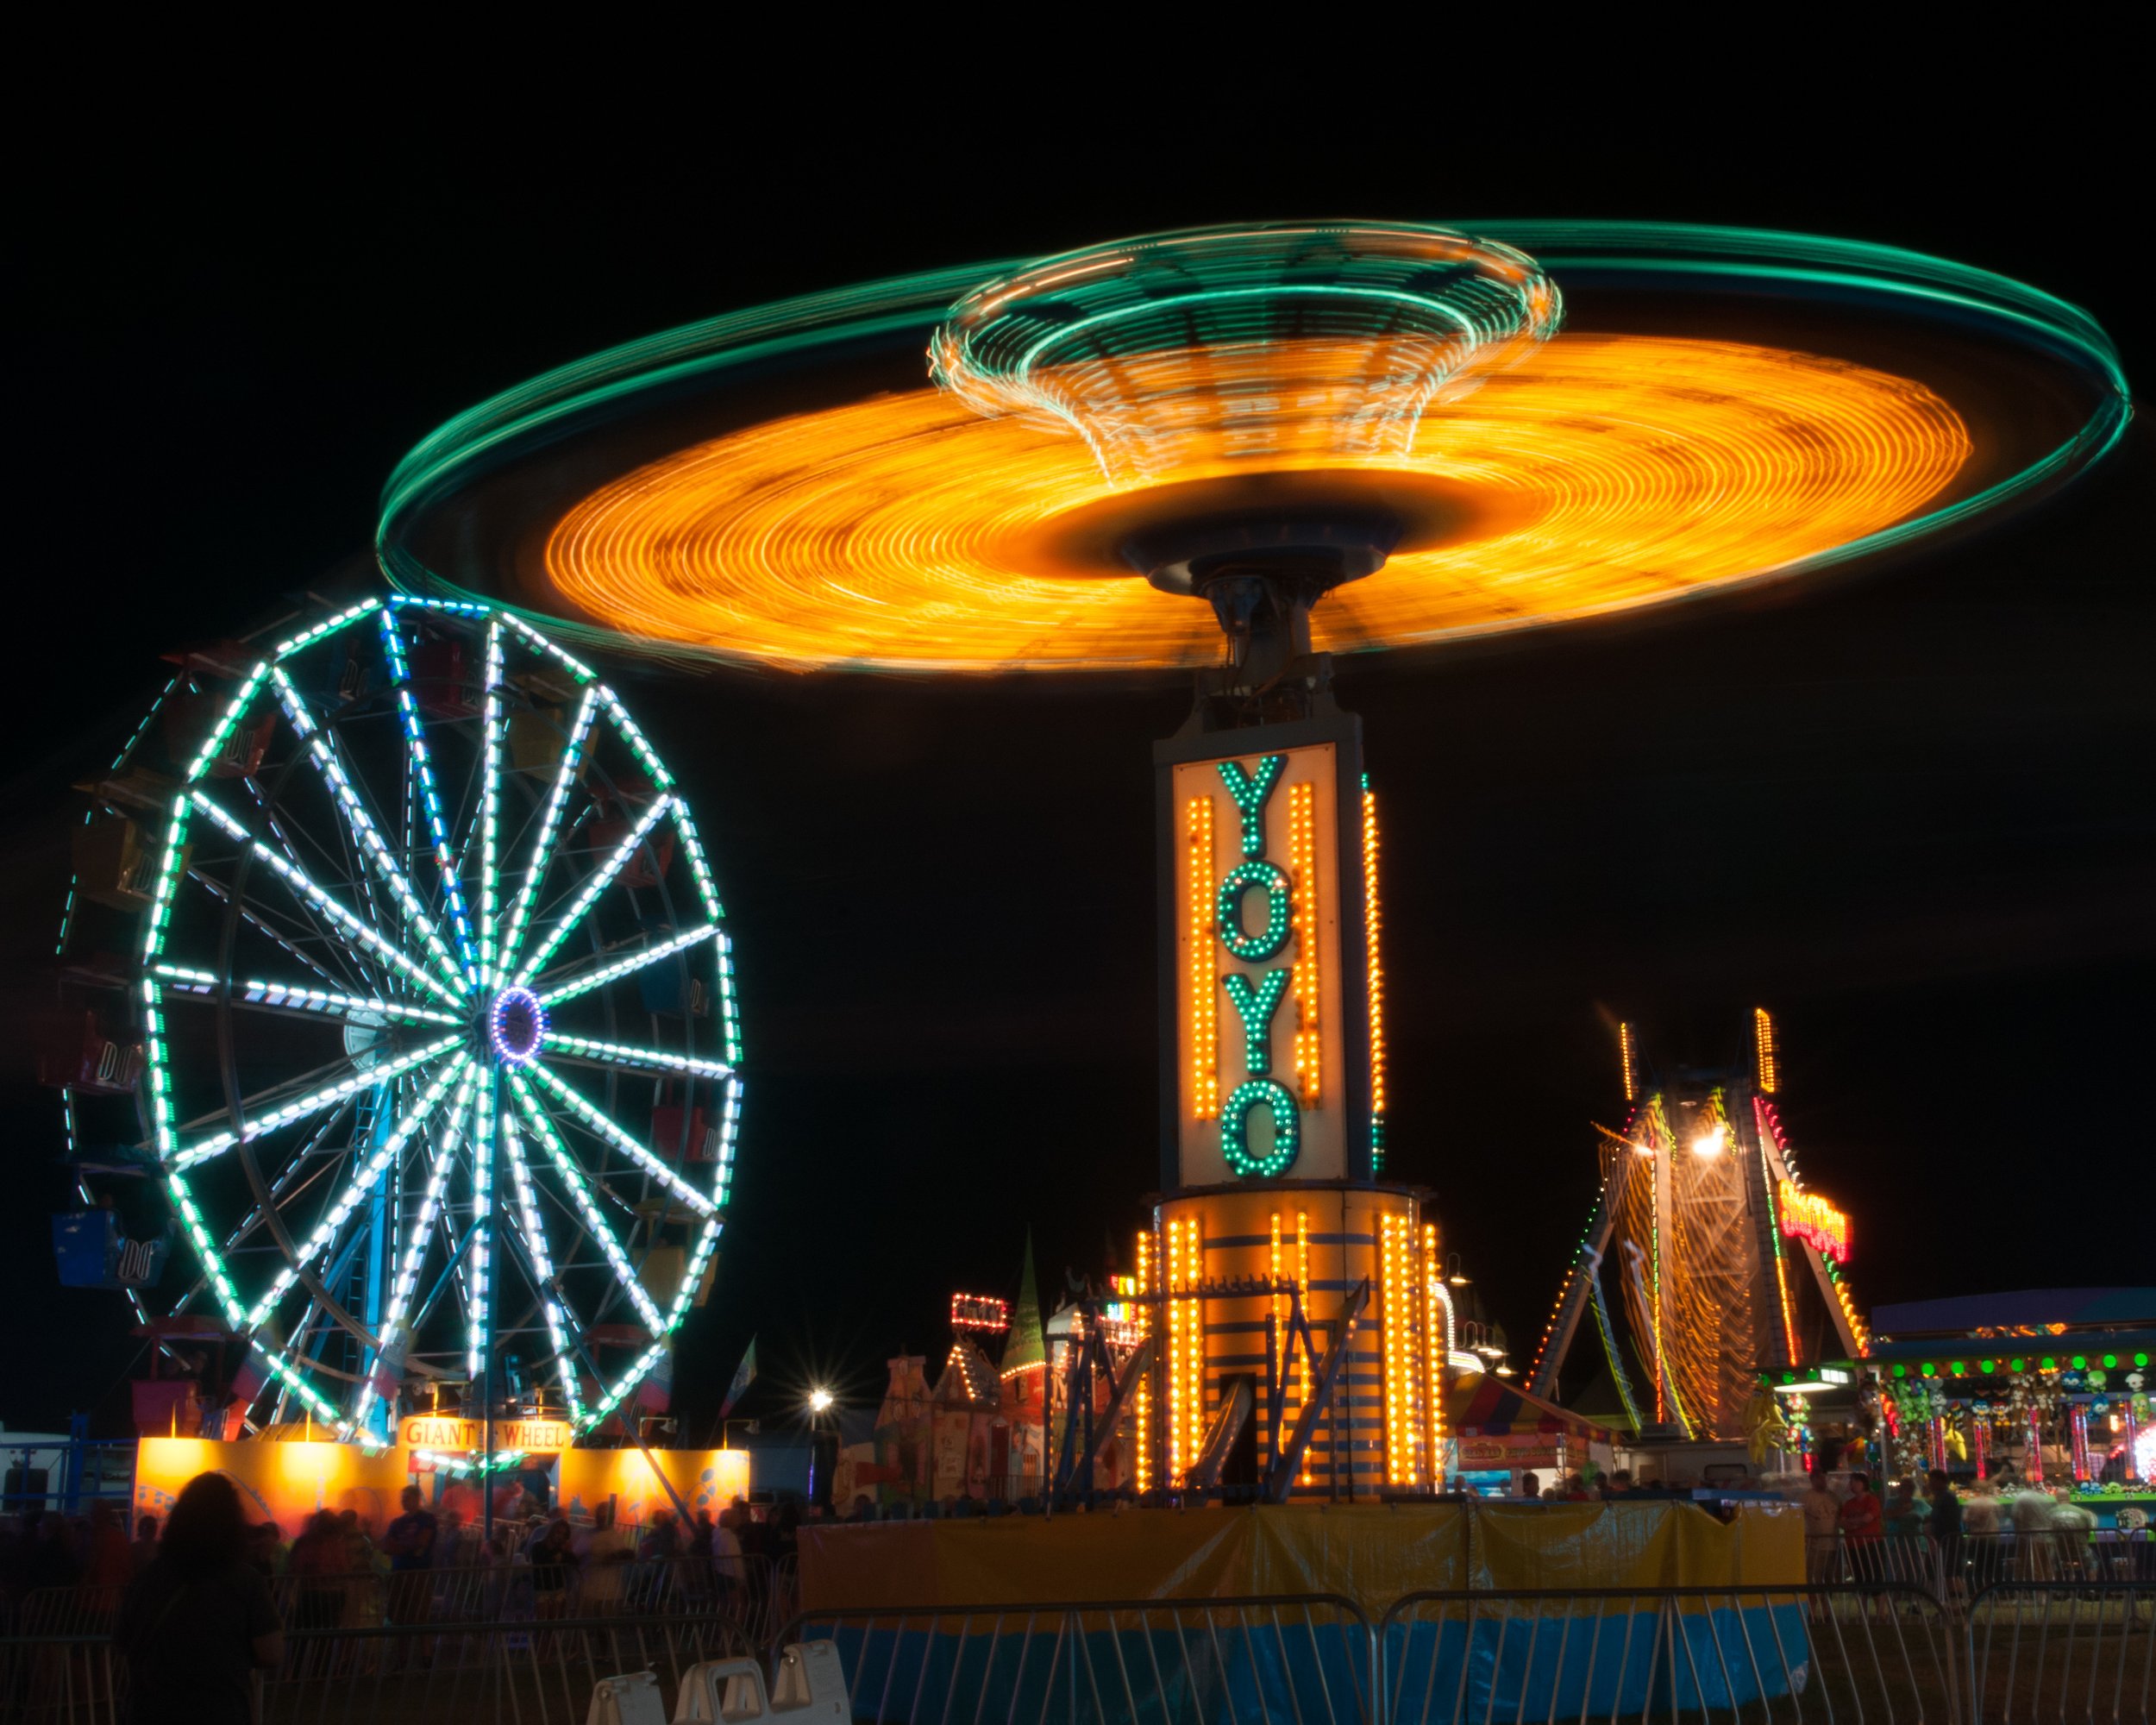 Contact — The Saginaw County Fair